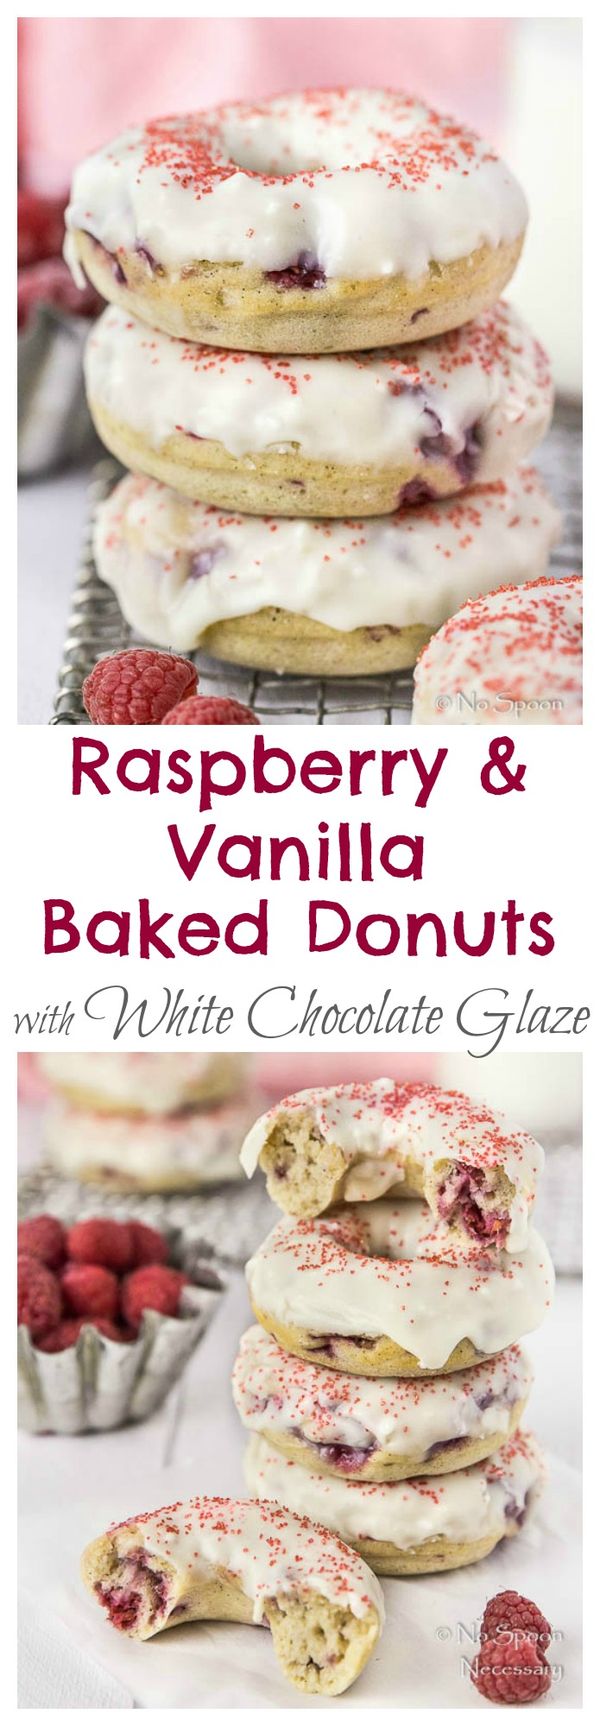 Raspberry & Vanilla Baked Donuts (with White Chocolate Glaze